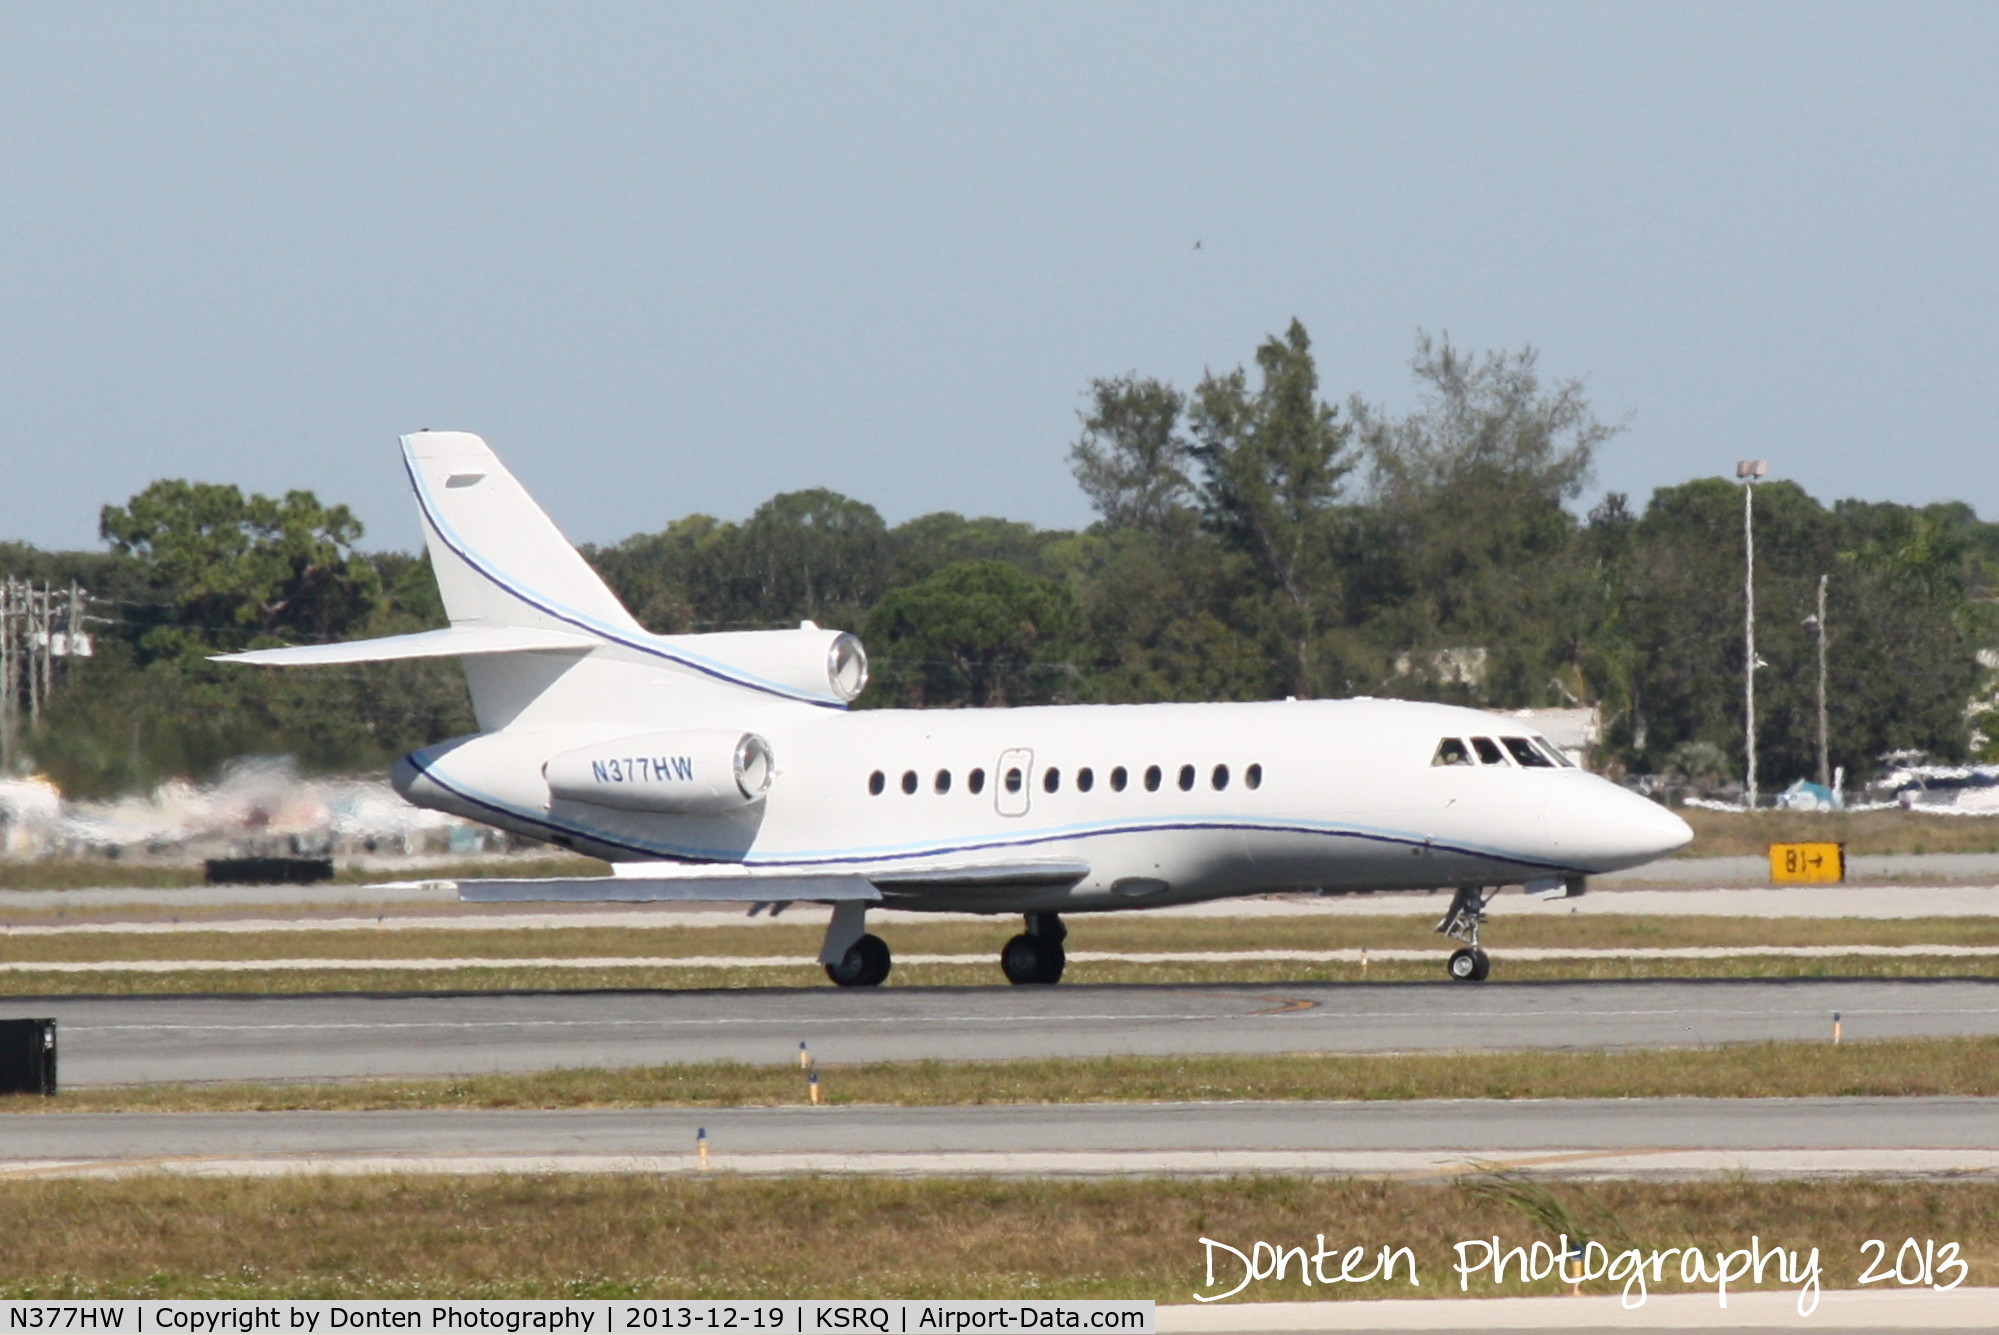 N377HW, 1988 Dassault-Breguet Falcon (Mystere) 900 C/N 37, Dassault Falcon 900 (N377HW) arrives at Sarasota-Bradenton International Airport following a flight from Fernando Ribas Dominicci Airport